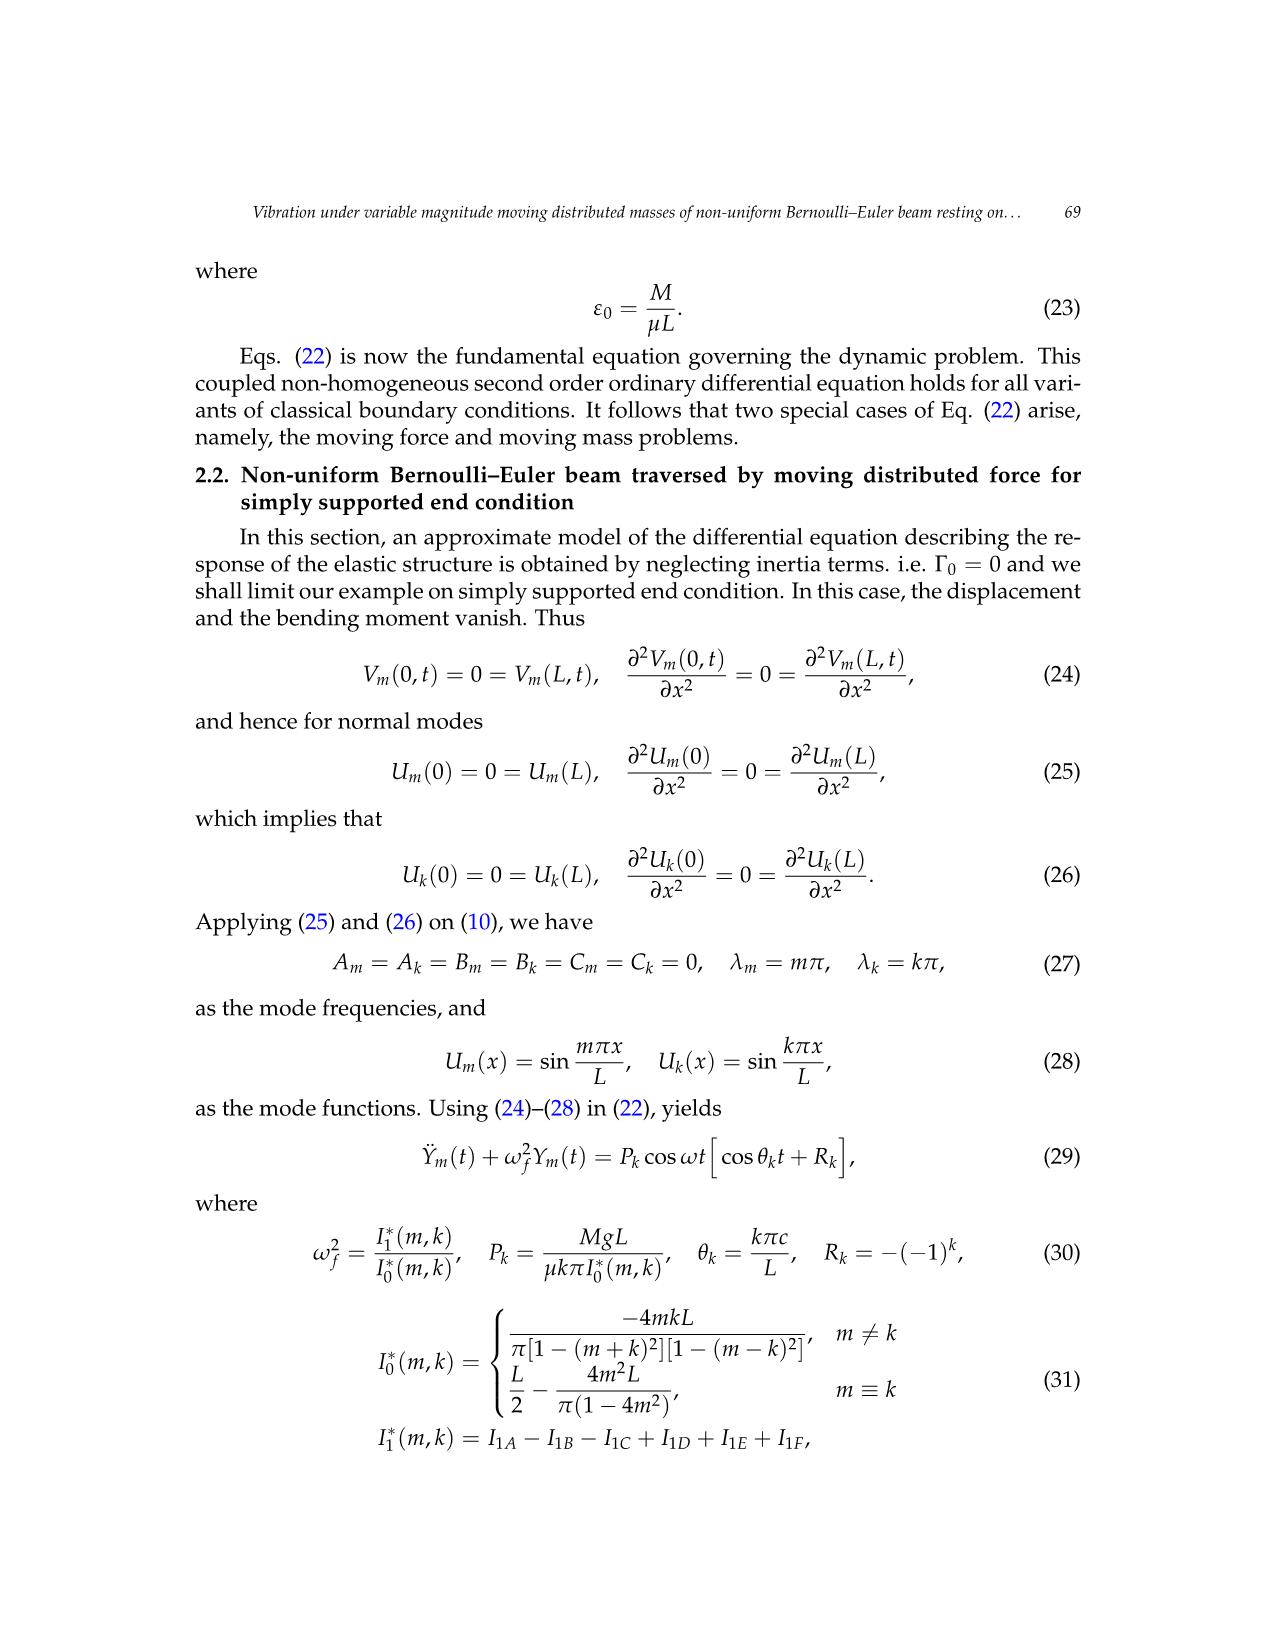 Vibration under variable magnitude moving distributed masses of non-uniform bernoulli–euler beam resting on pasternak elastic foundation trang 7